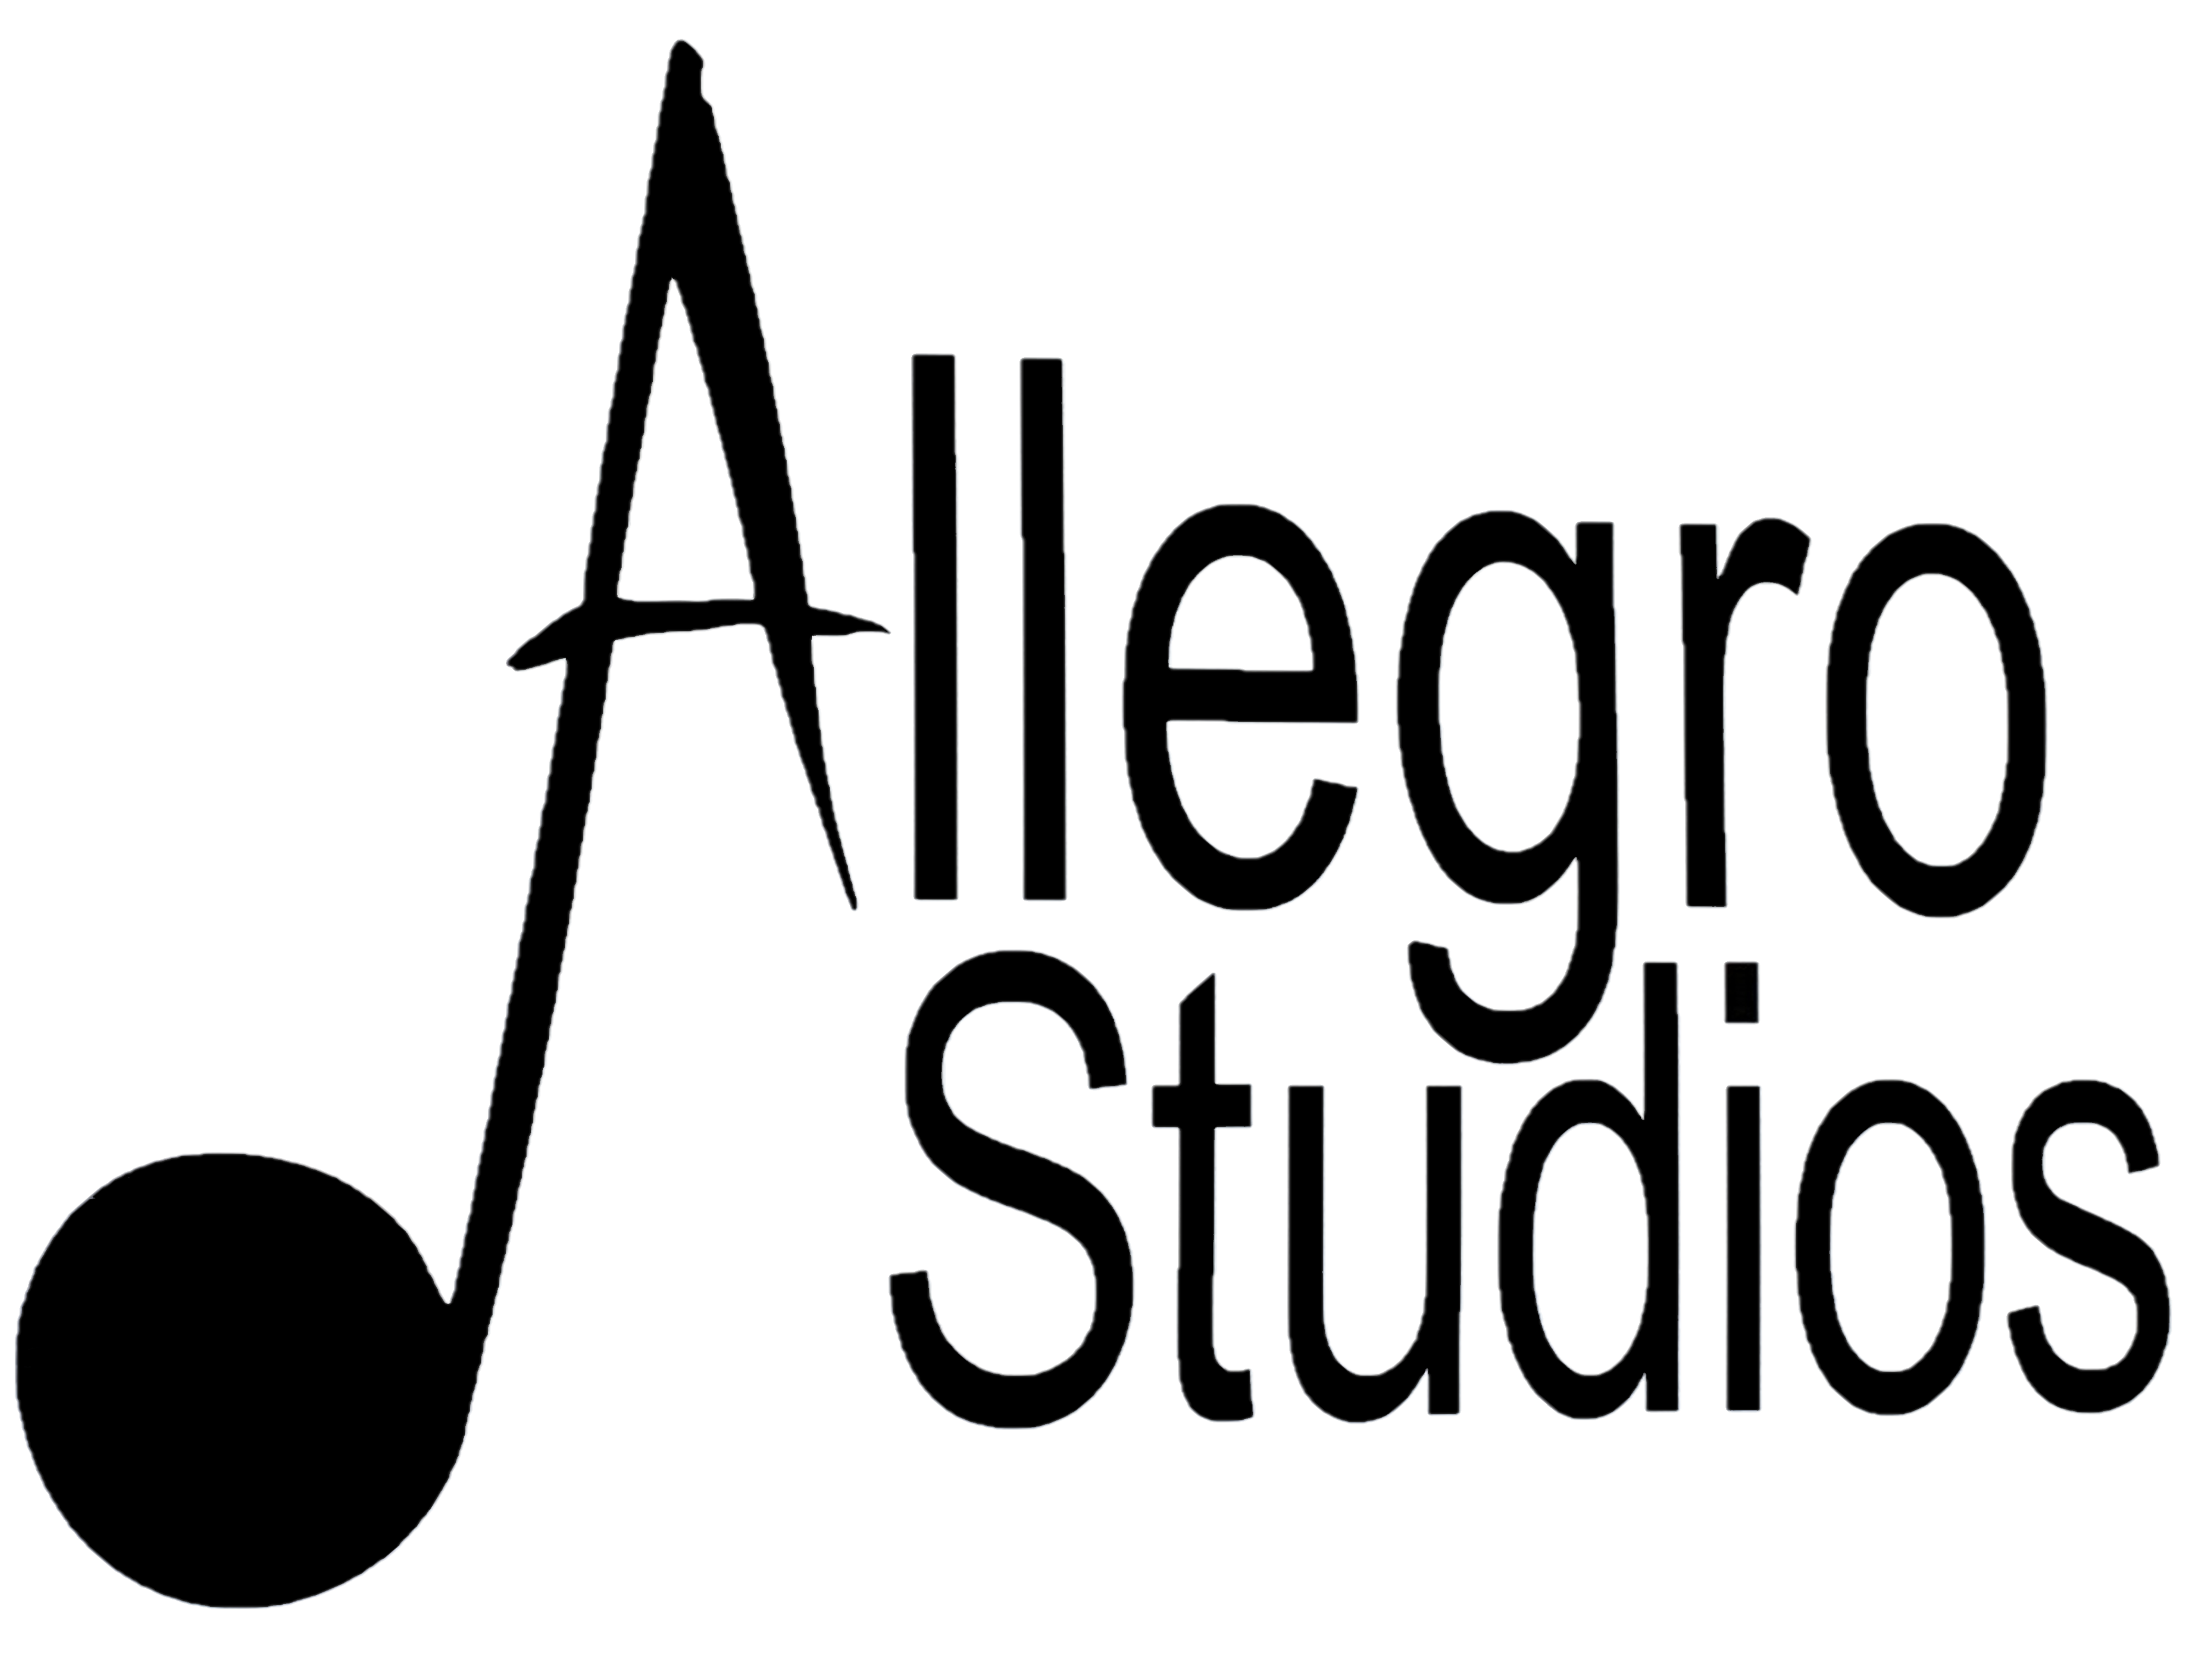 Allegro Studios logo